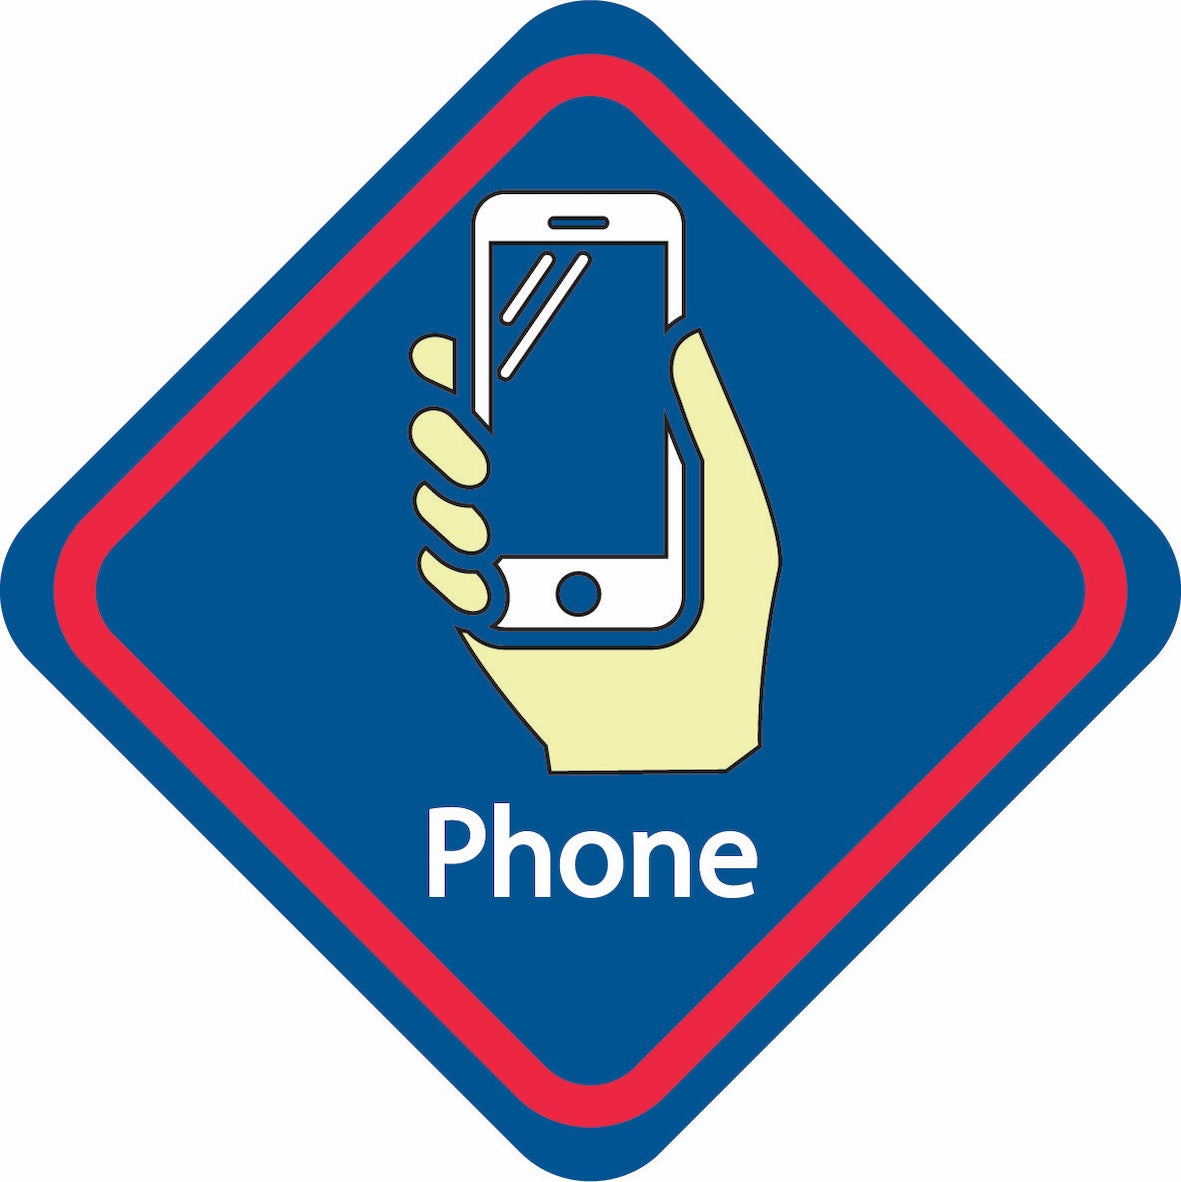 phone or mobile reminder sign